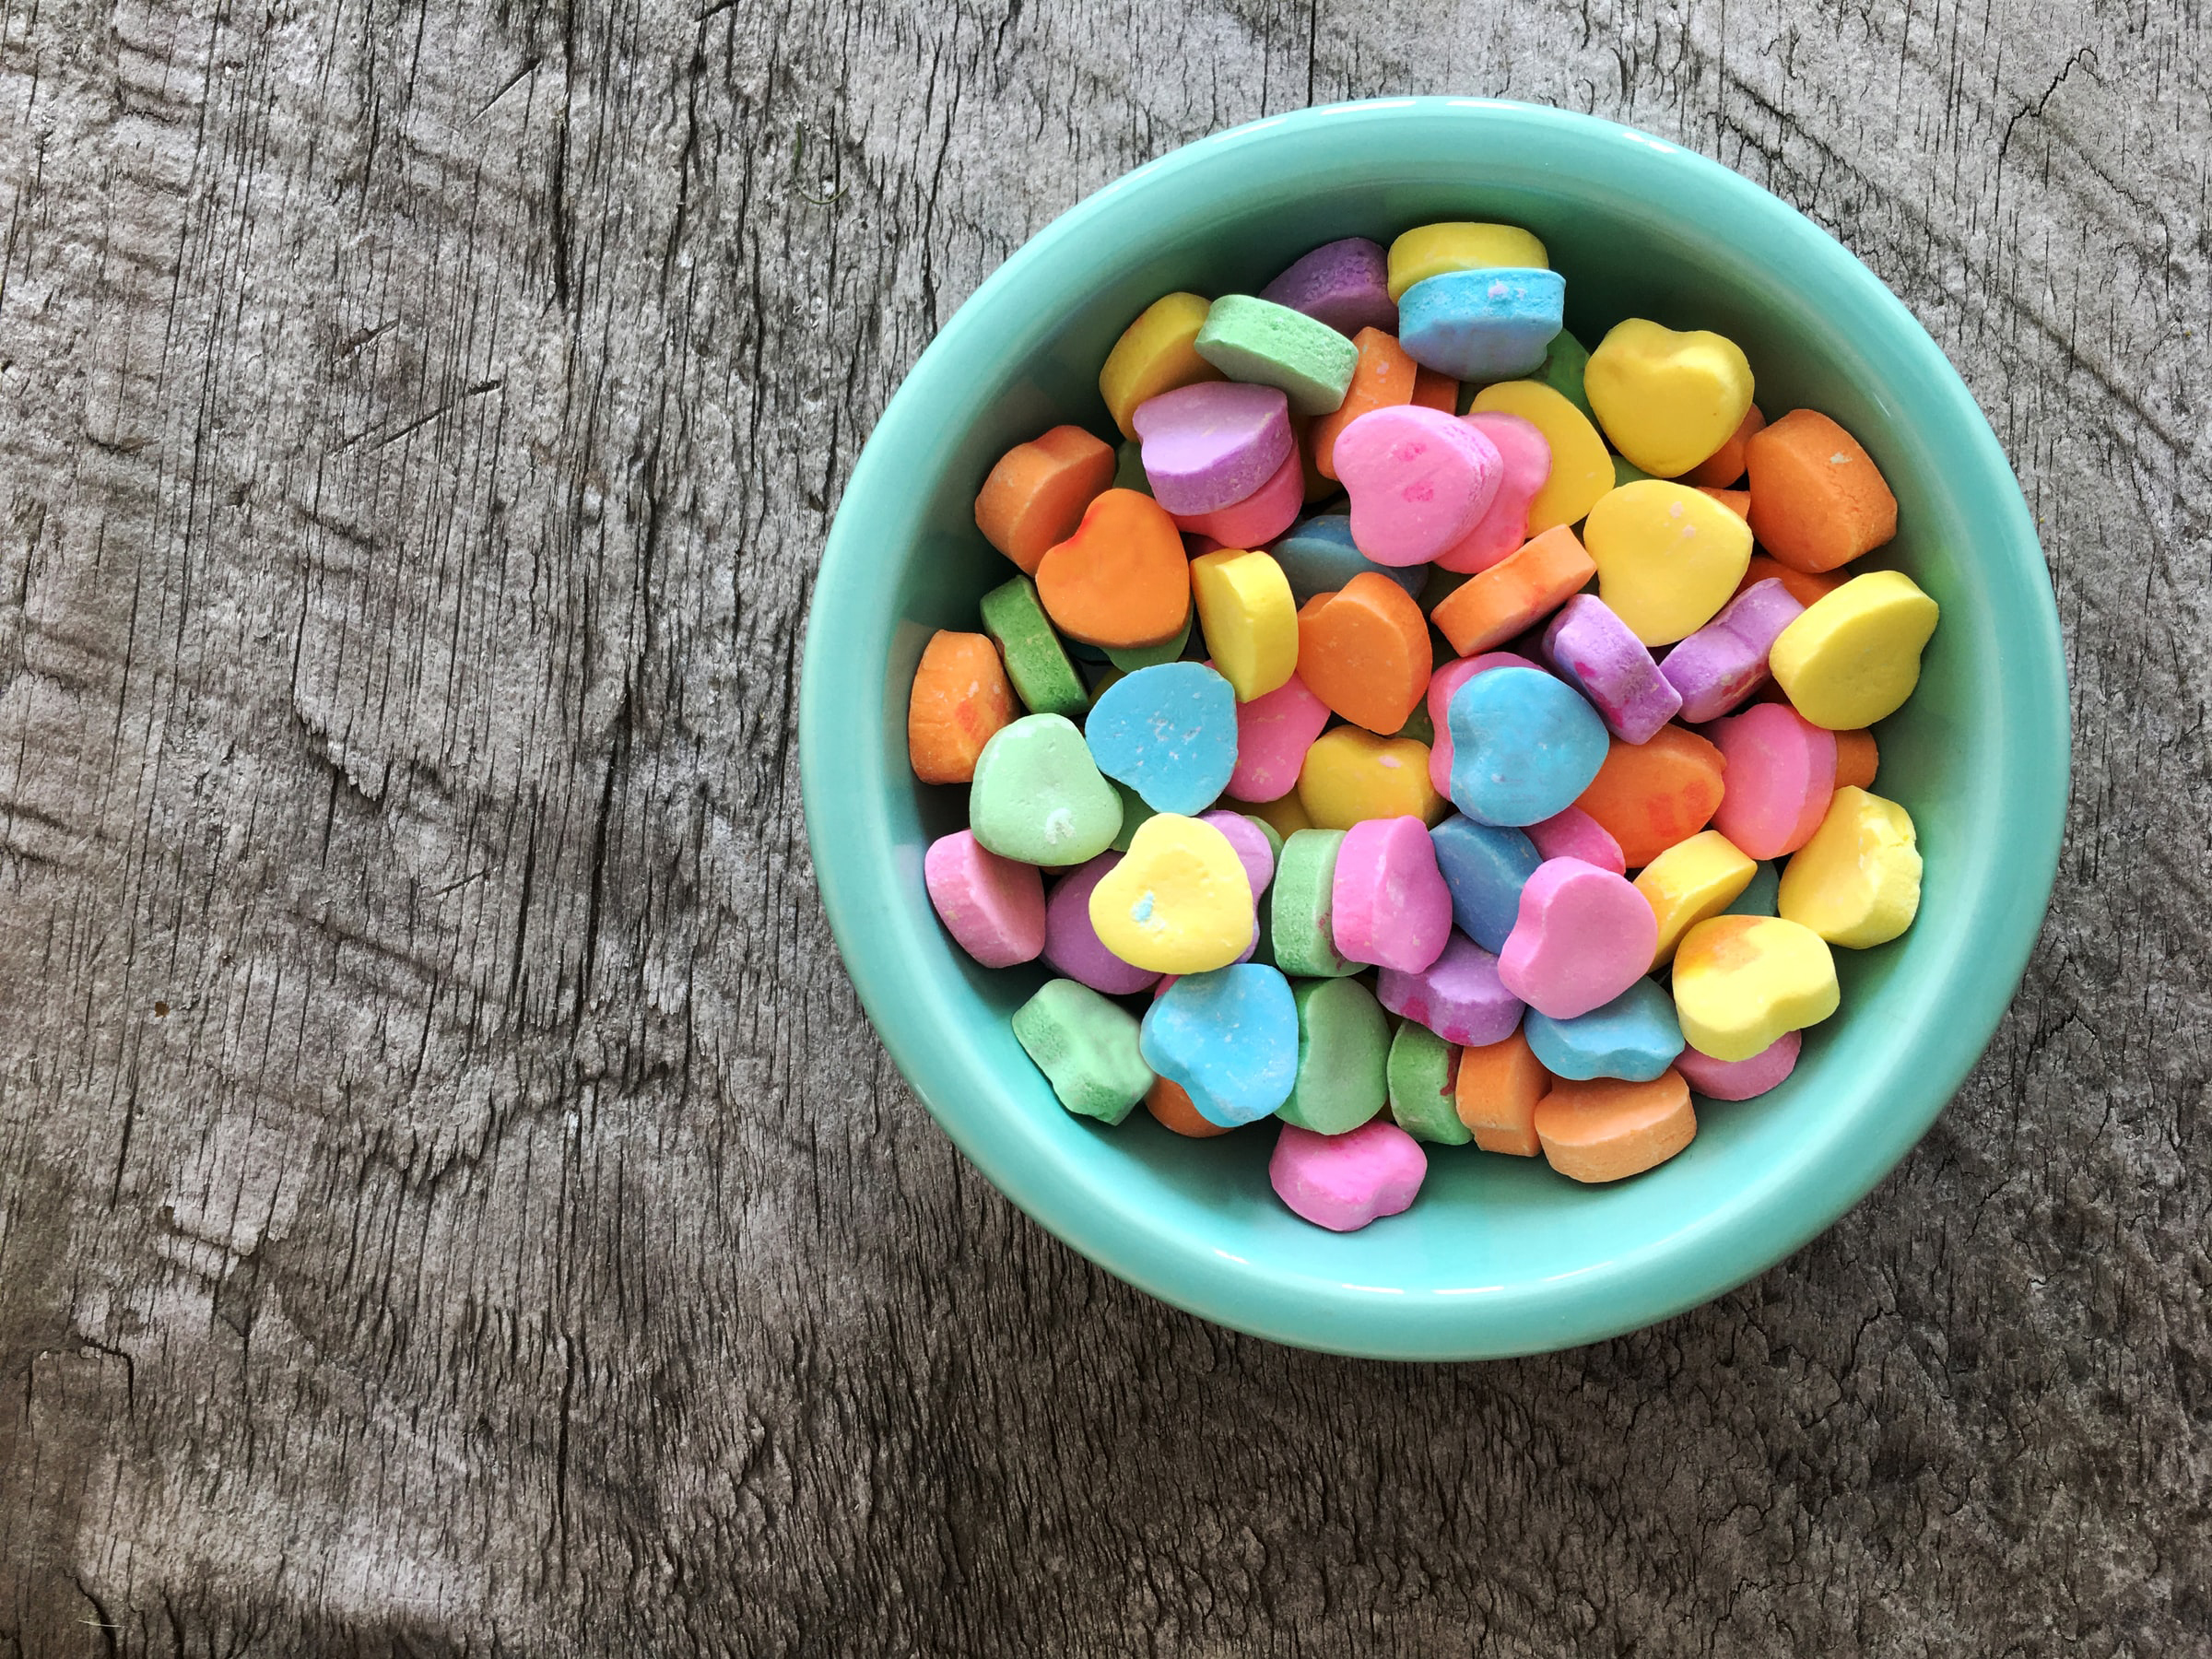 Fotografia di una tazza piena di caramelle colorate